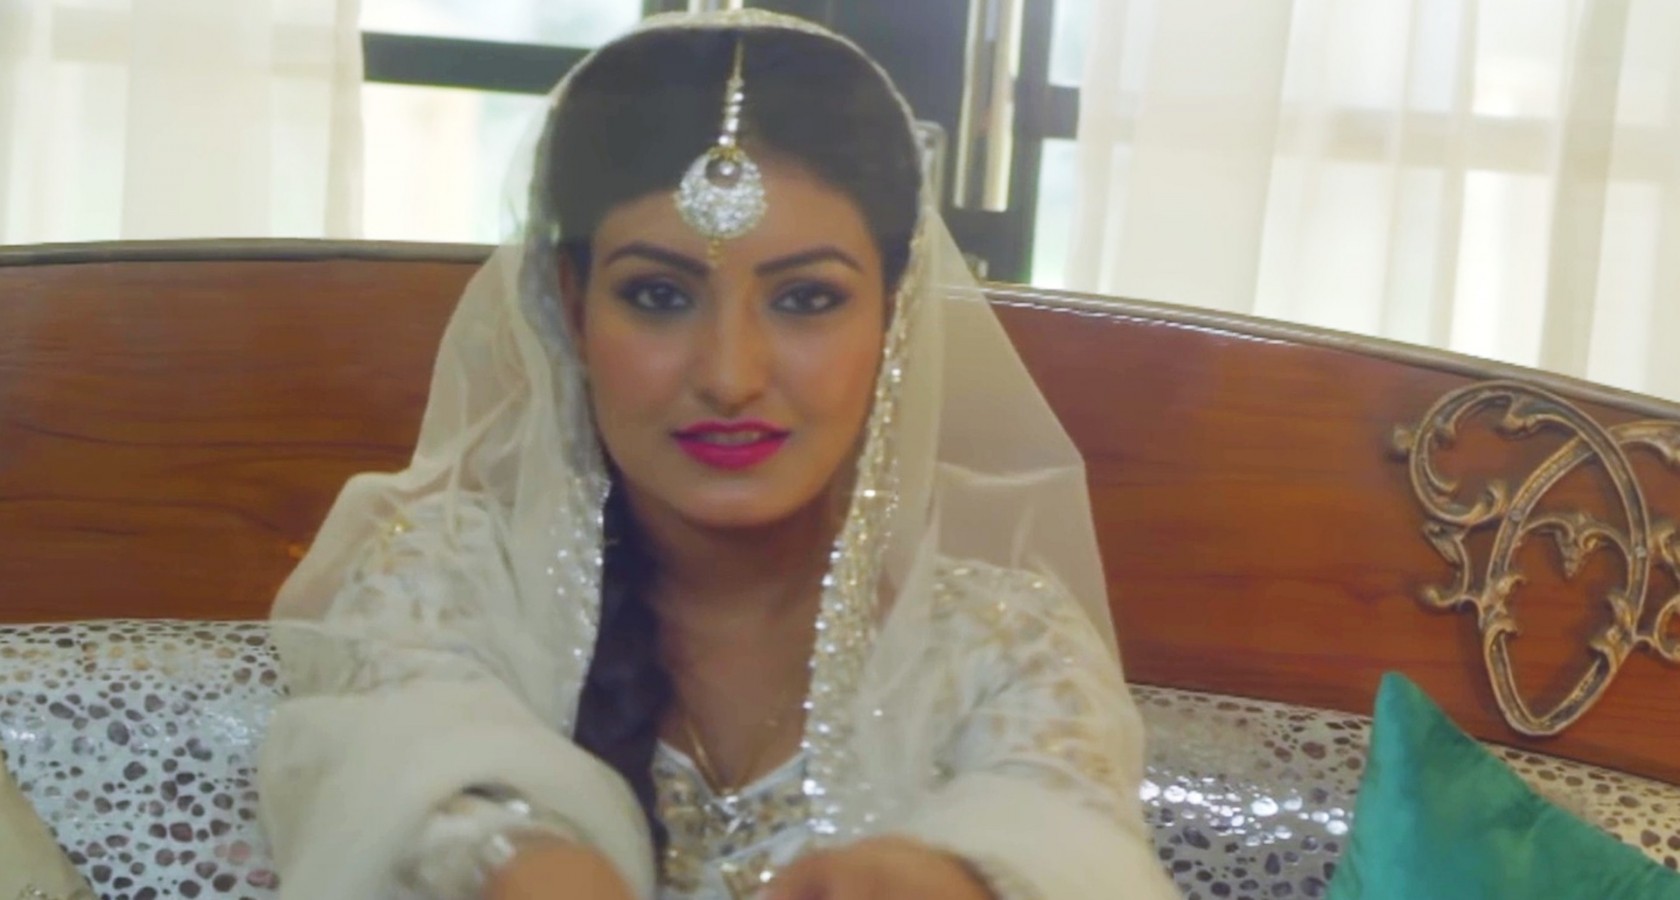 punjabi bridal wallpaper,headpiece,bride,eyebrow,forehead,hair accessory